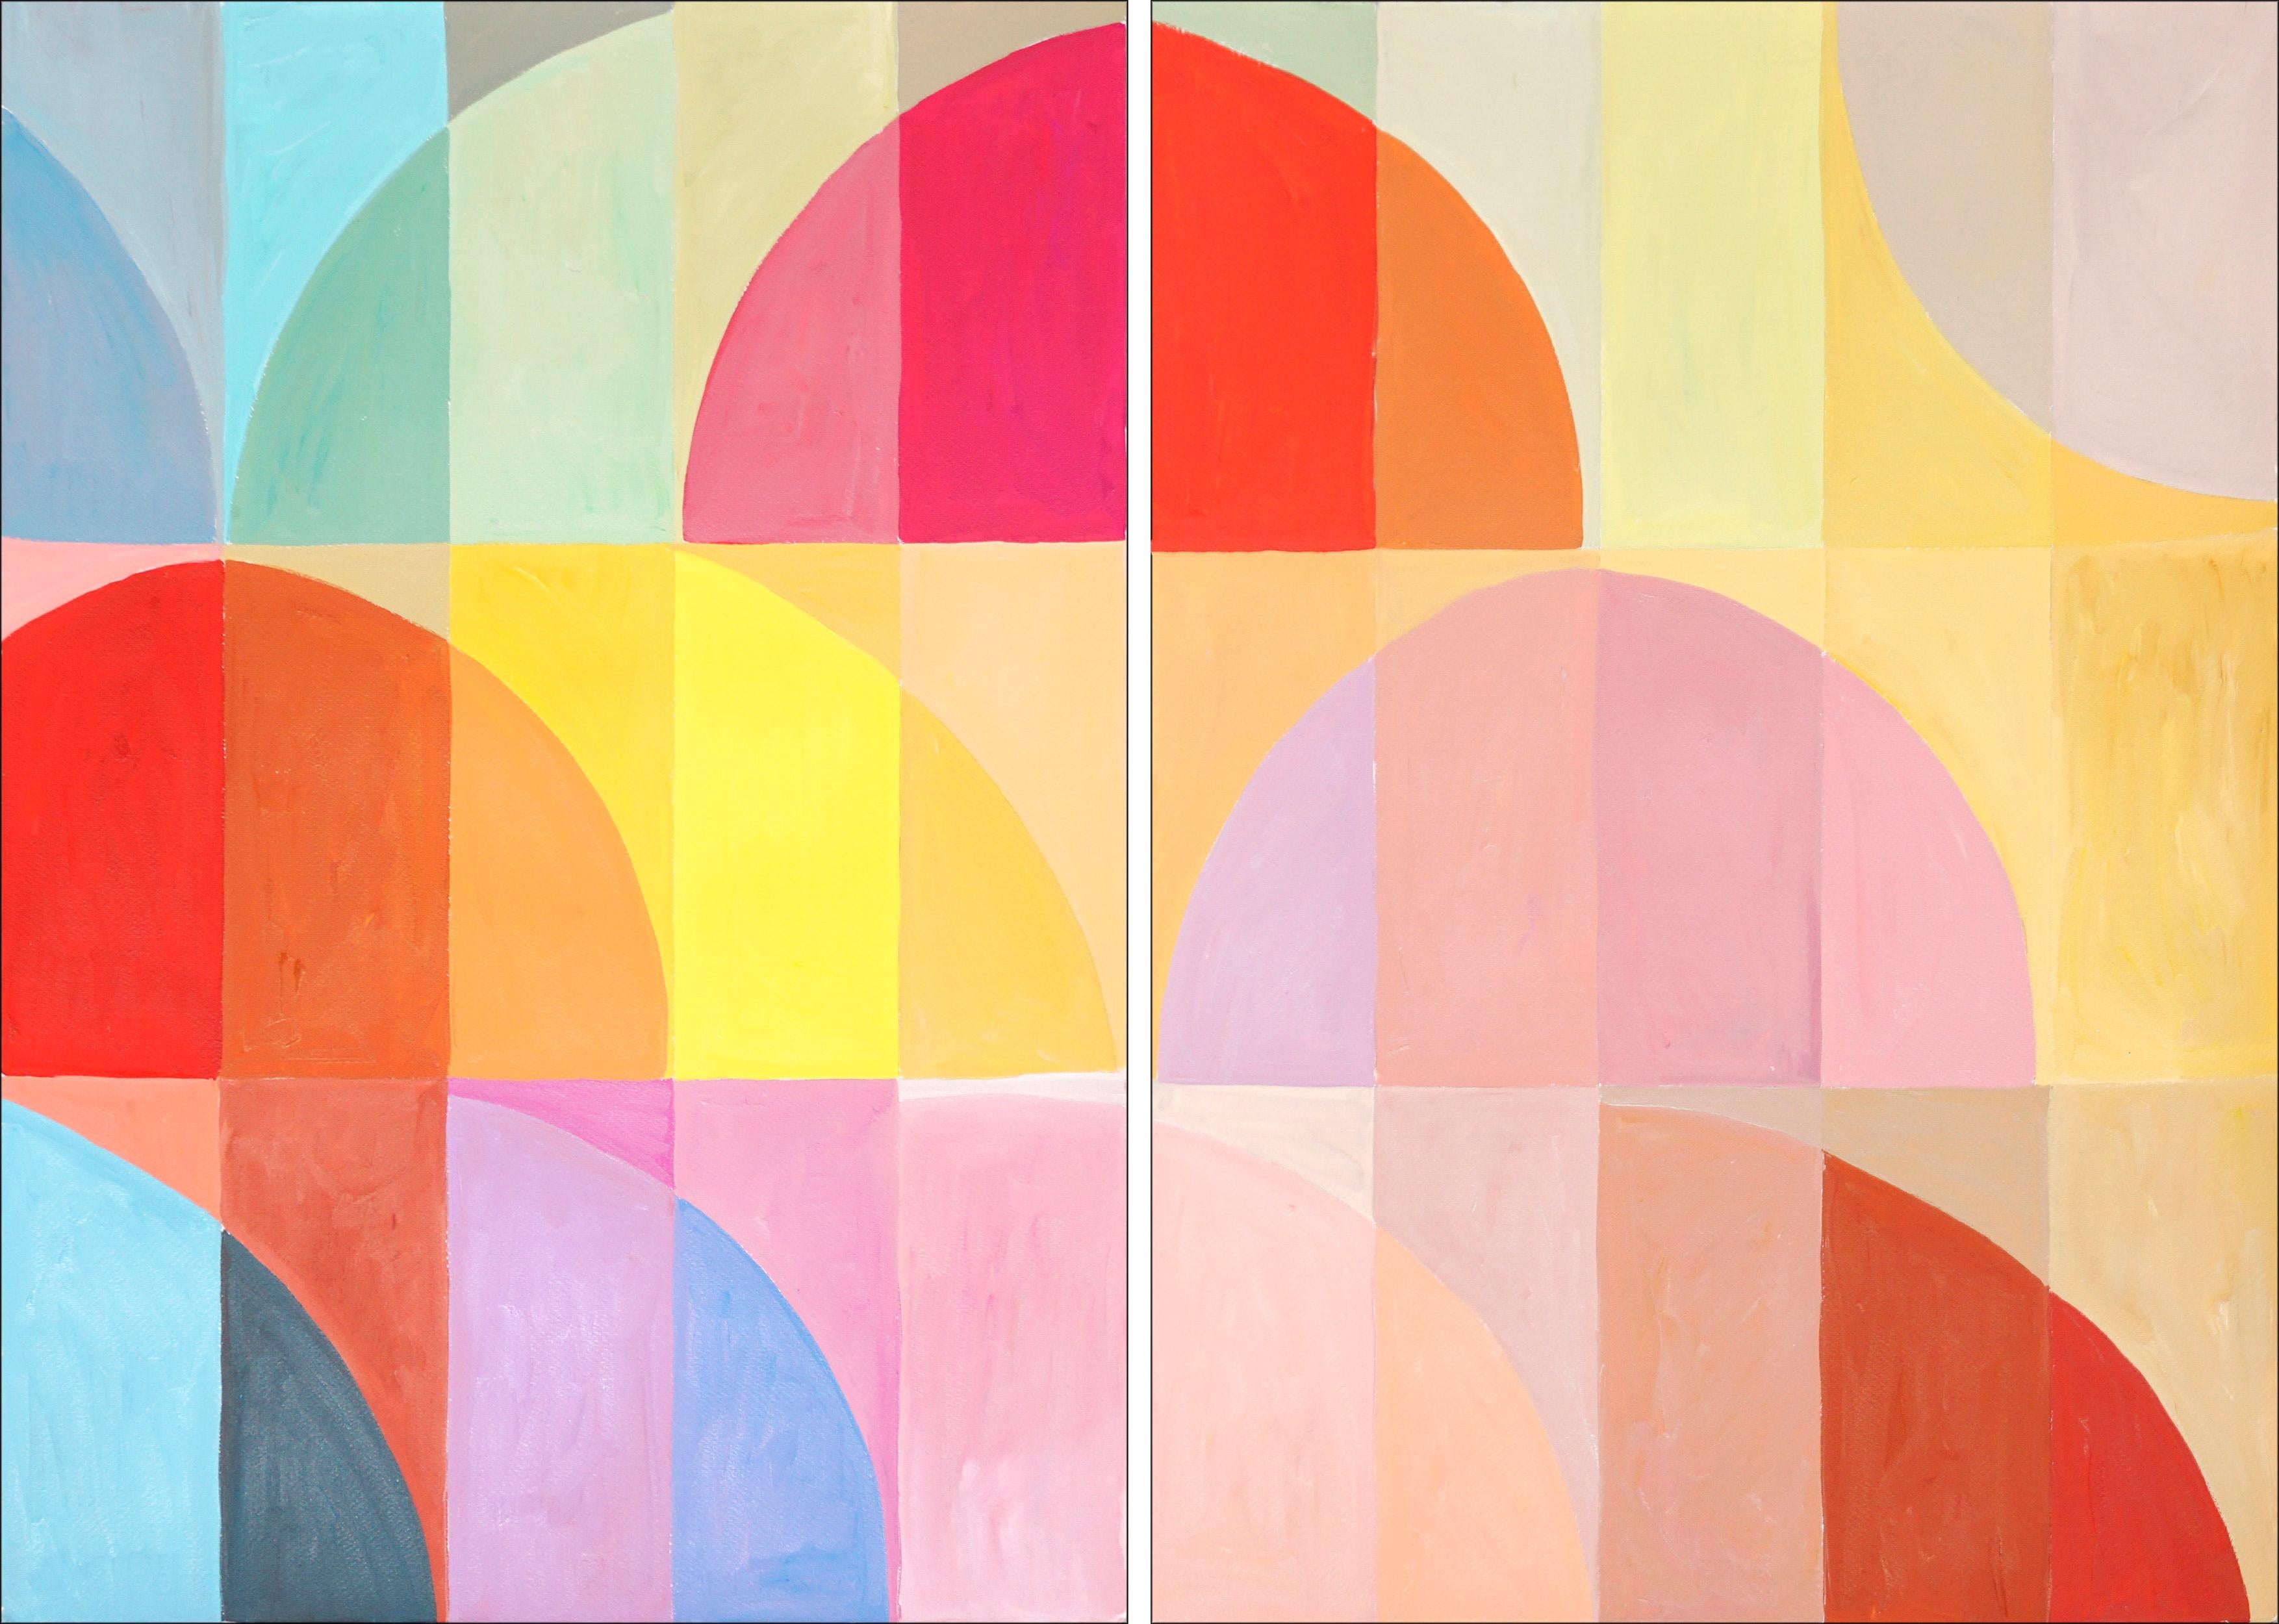 Natalia Roman Abstract Painting - Neon Hue Transitions, Bauhaus Architecture Pattern in Light Tones, Pink, Orange